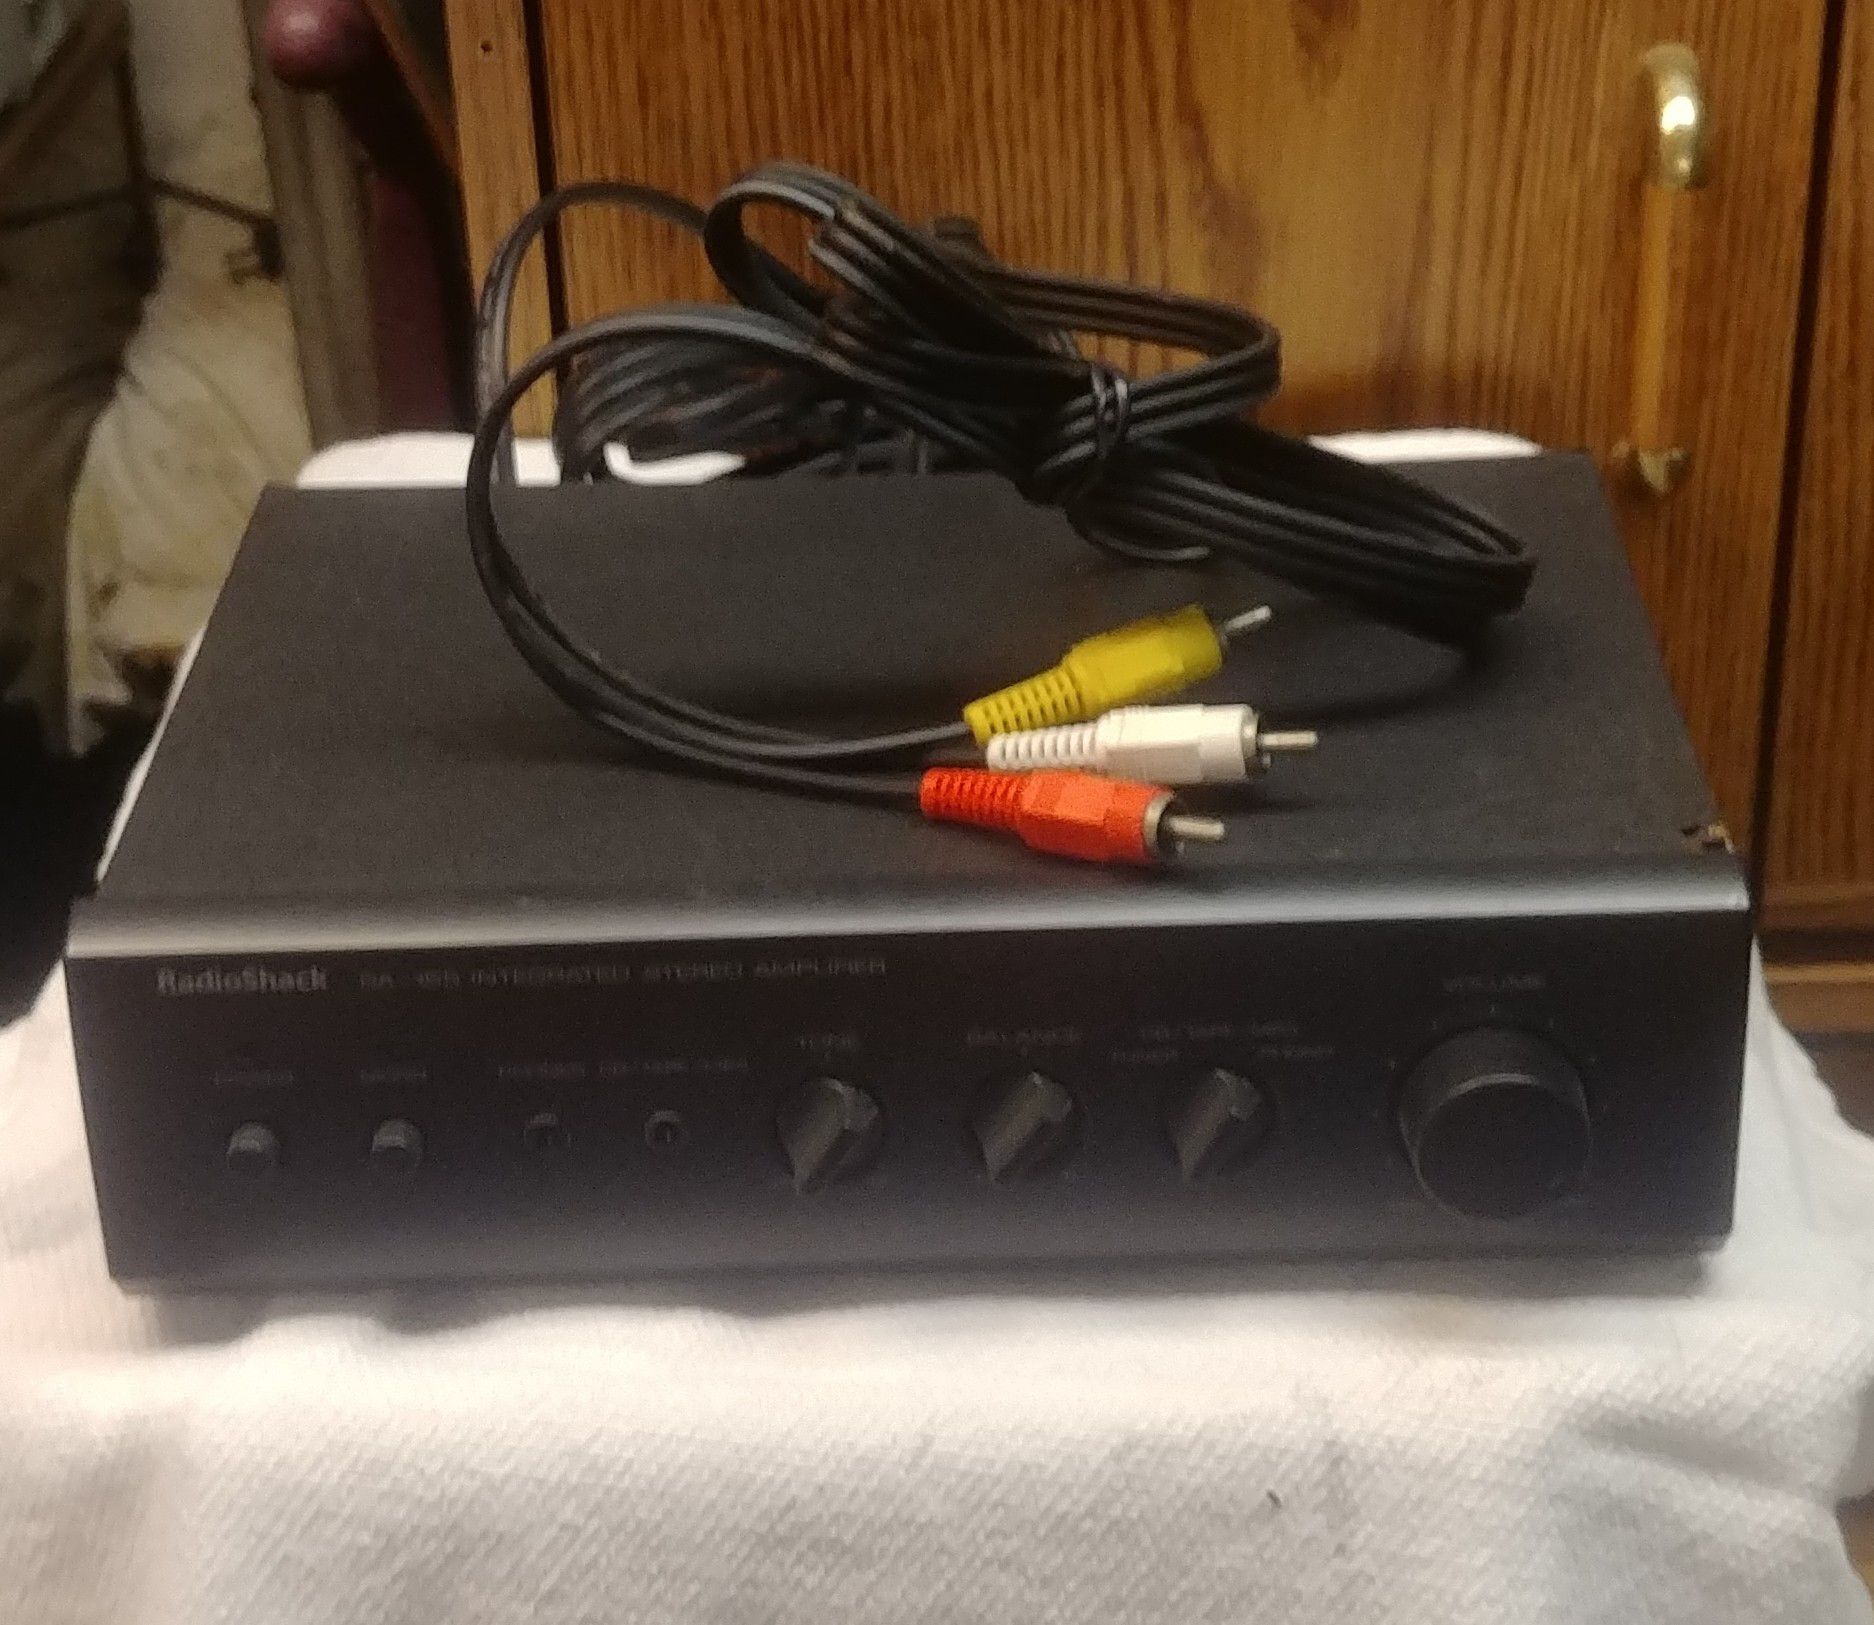 Radio Shack SA- 155 Integrated Stereo Amplifier